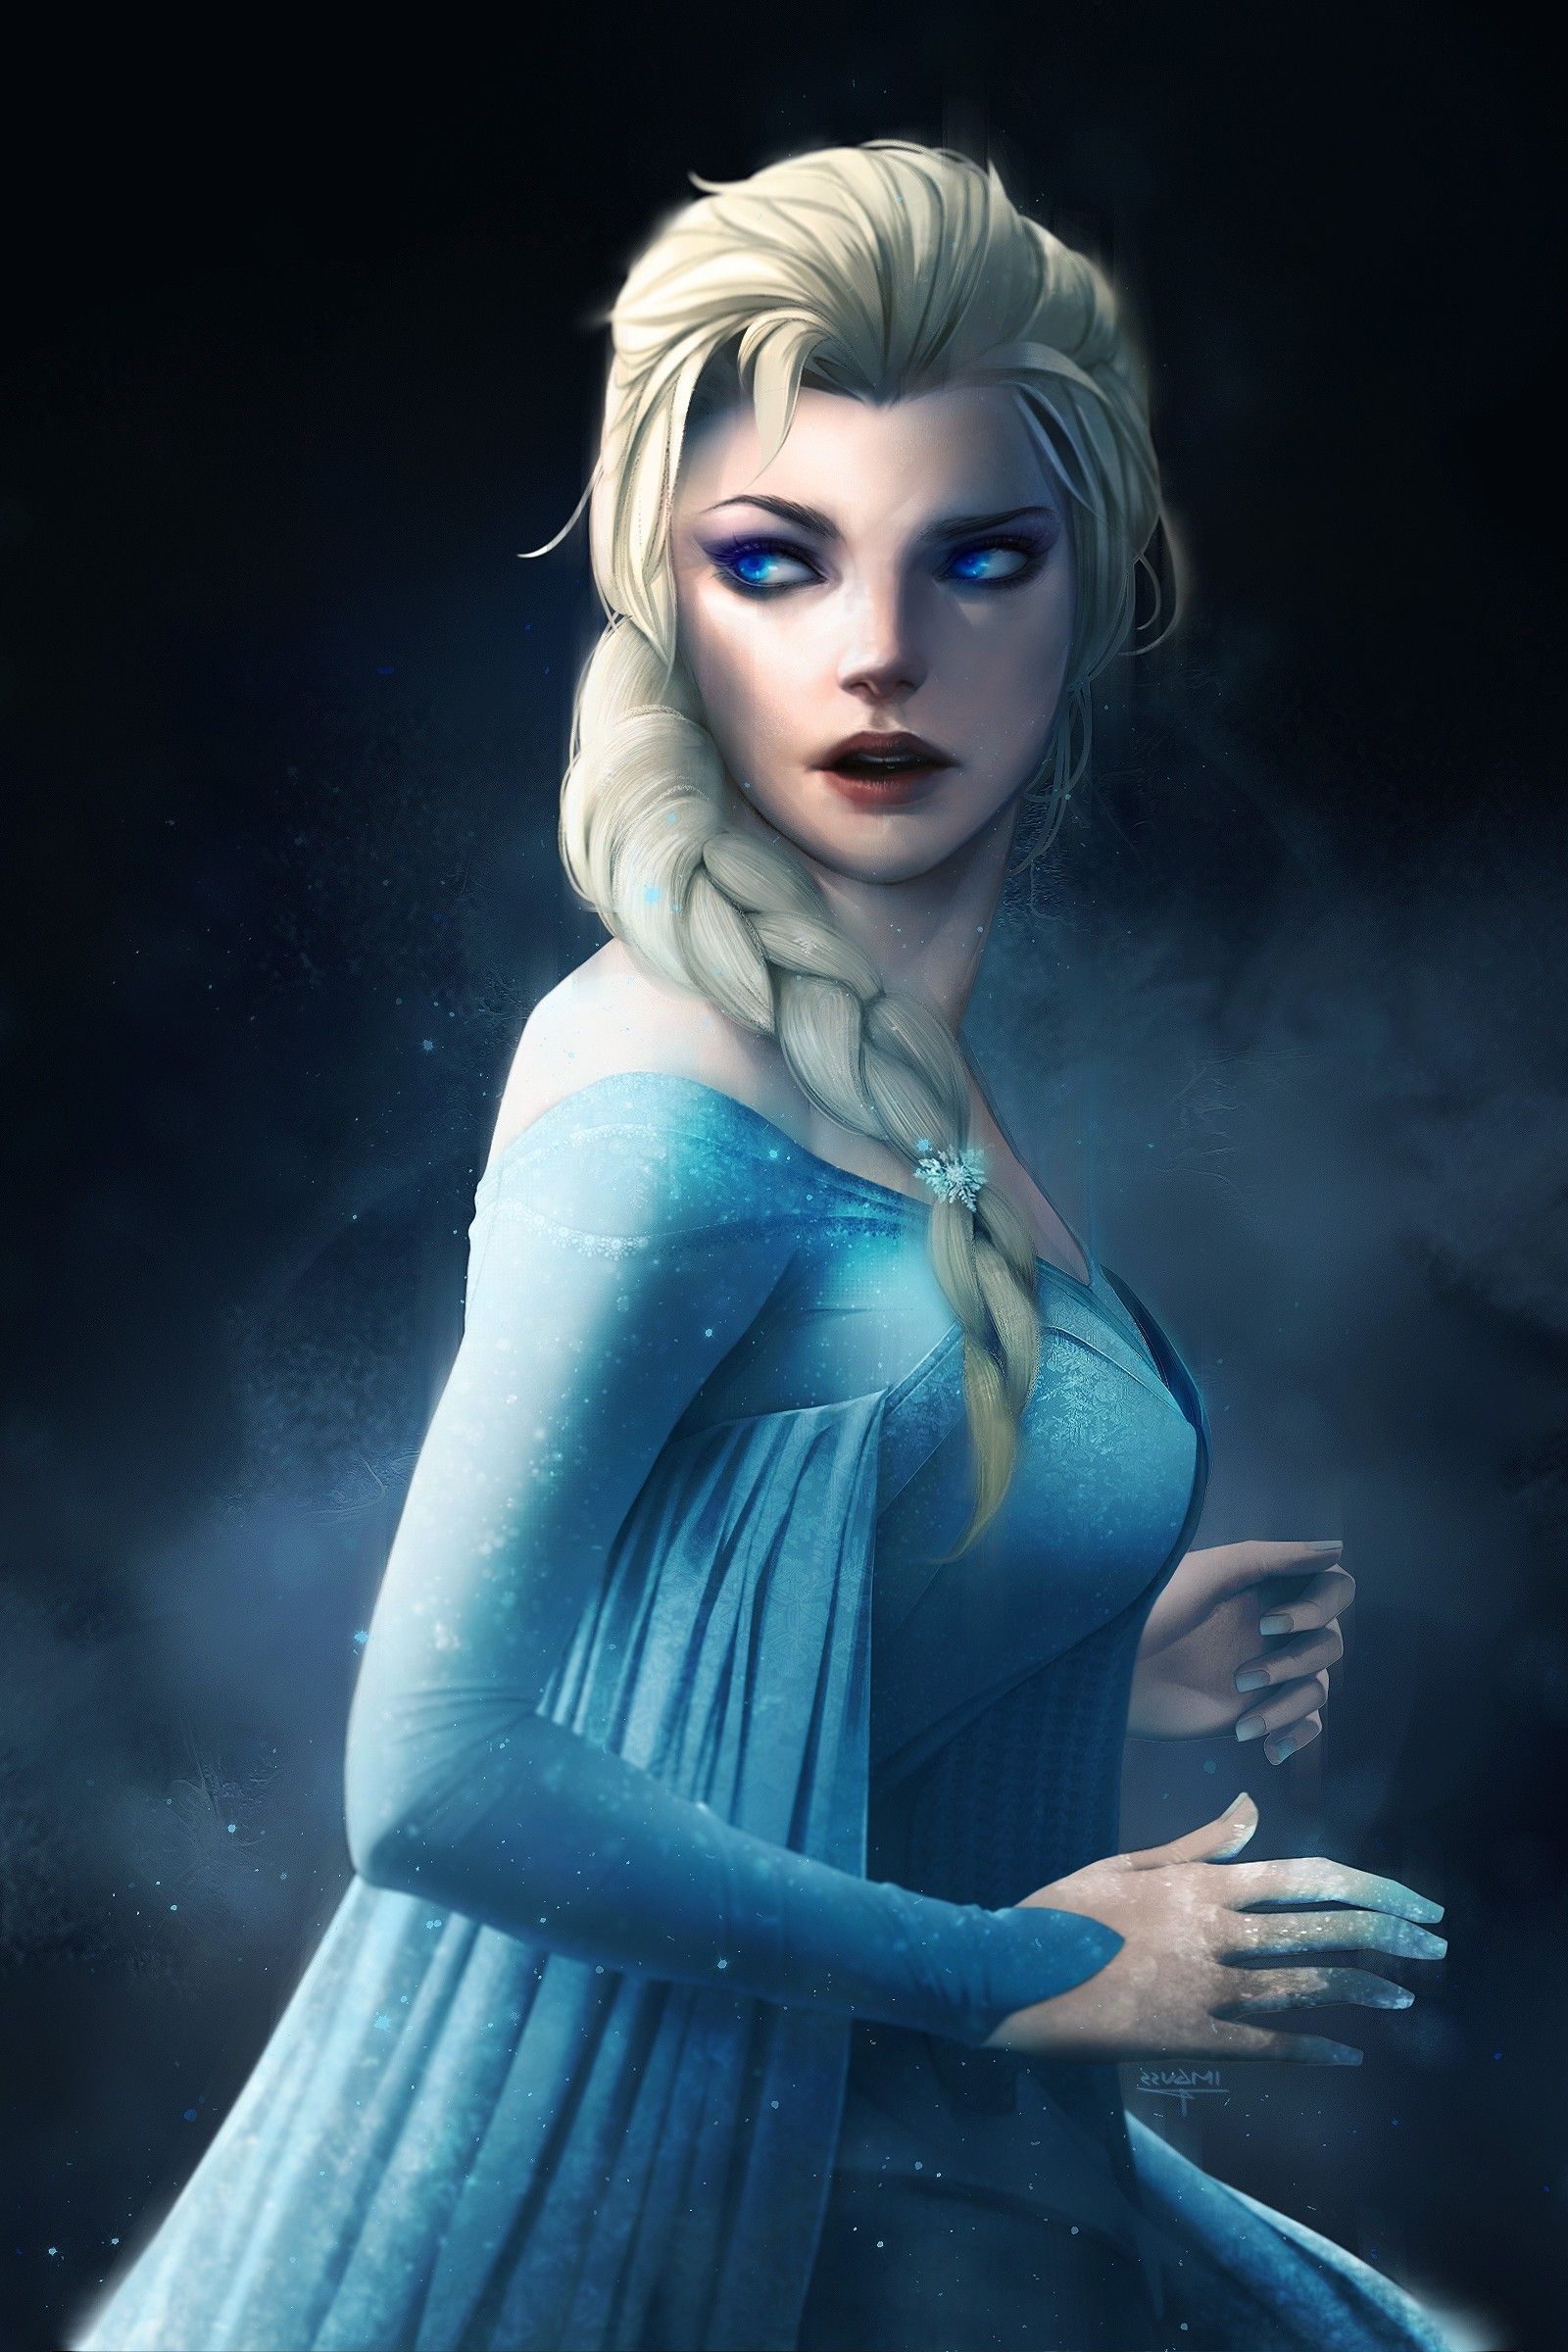 3D princess wallpaper, cg artwork, blue, fictional character, illustration, photography